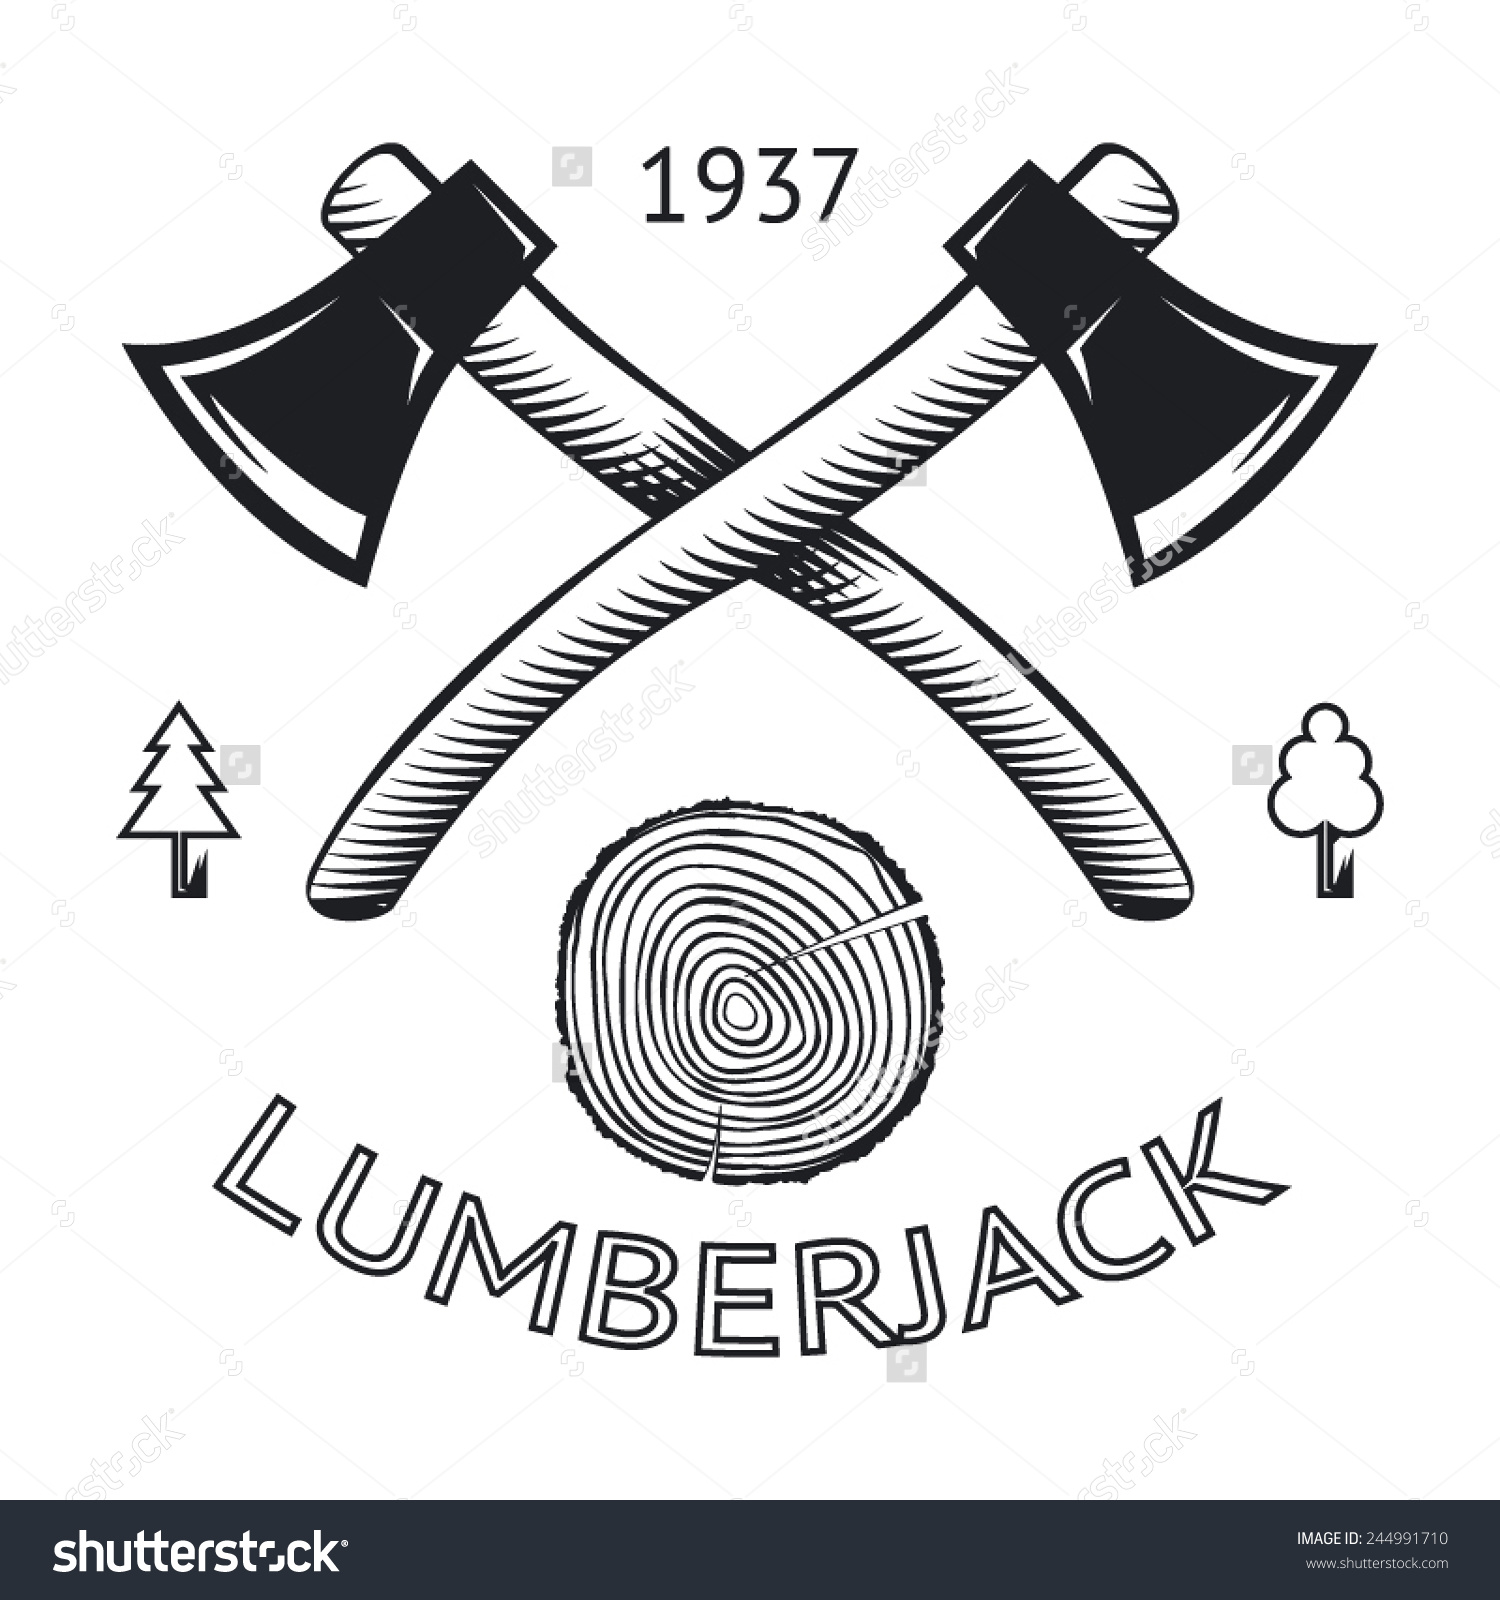 Lumberjack White Icons - Download Free Vector Art, Stock Graphics 